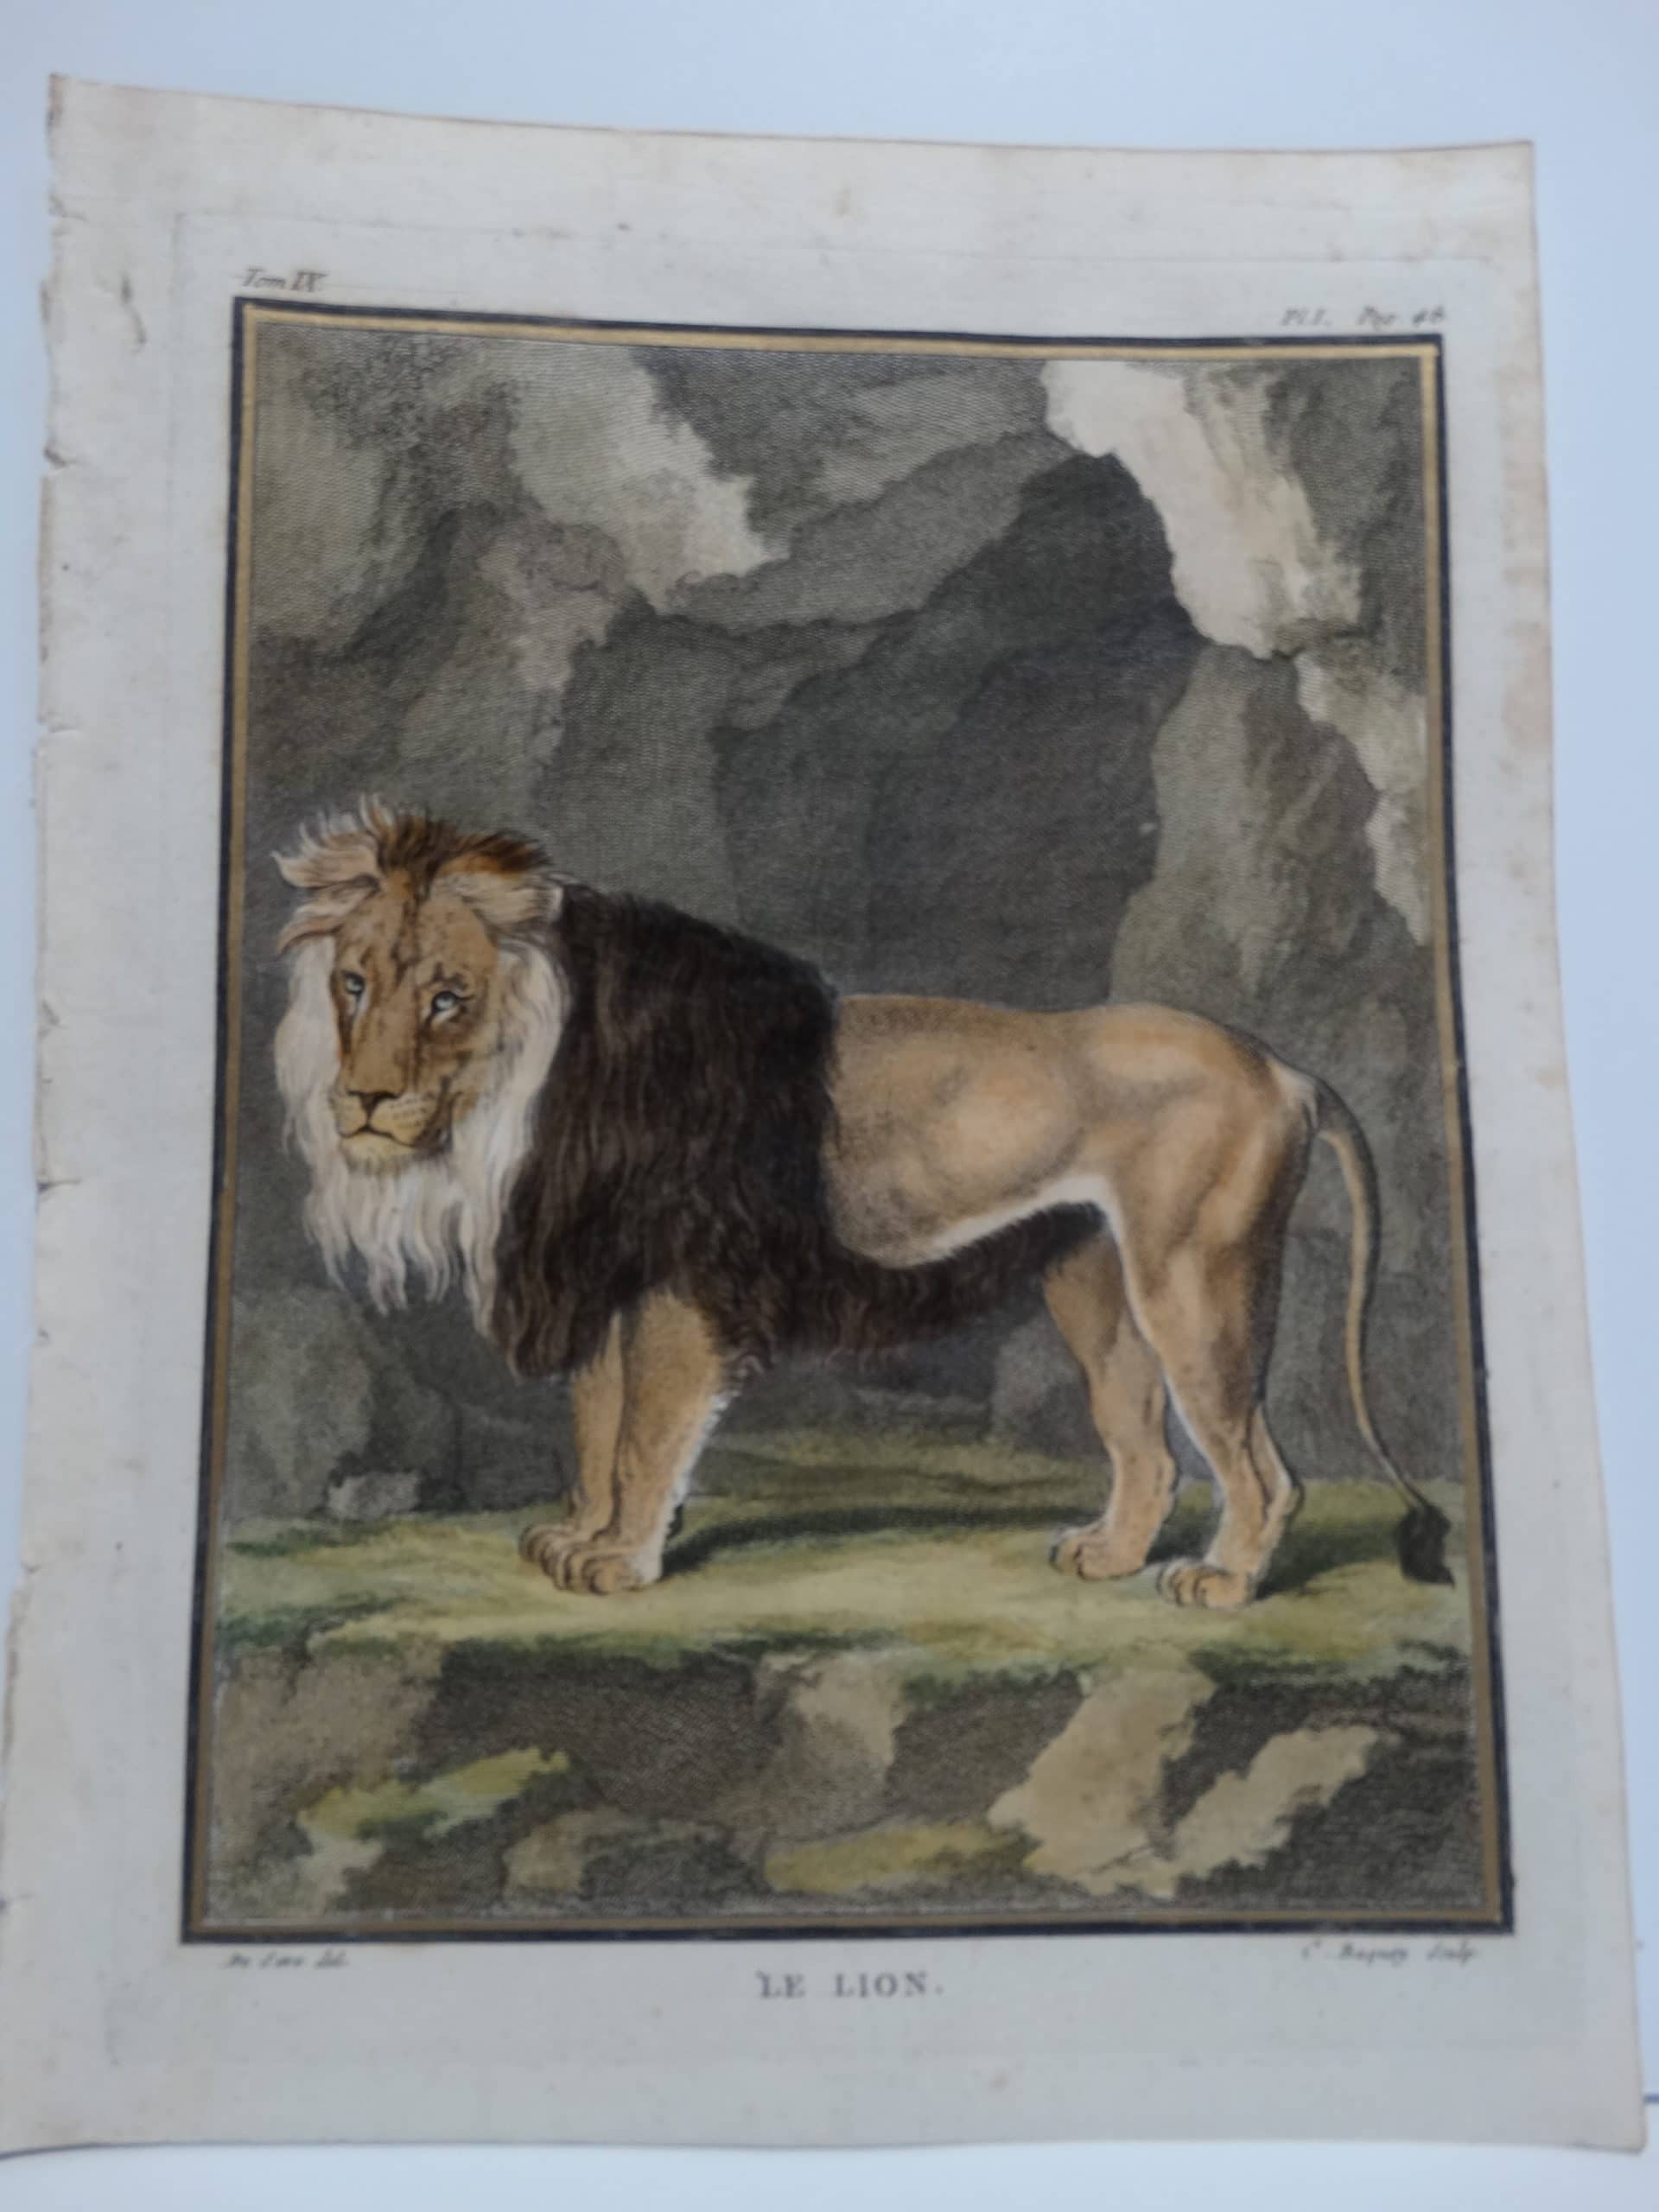 Wonderful DeSeve Compte de Buffon Lion engravings from the 1700's.